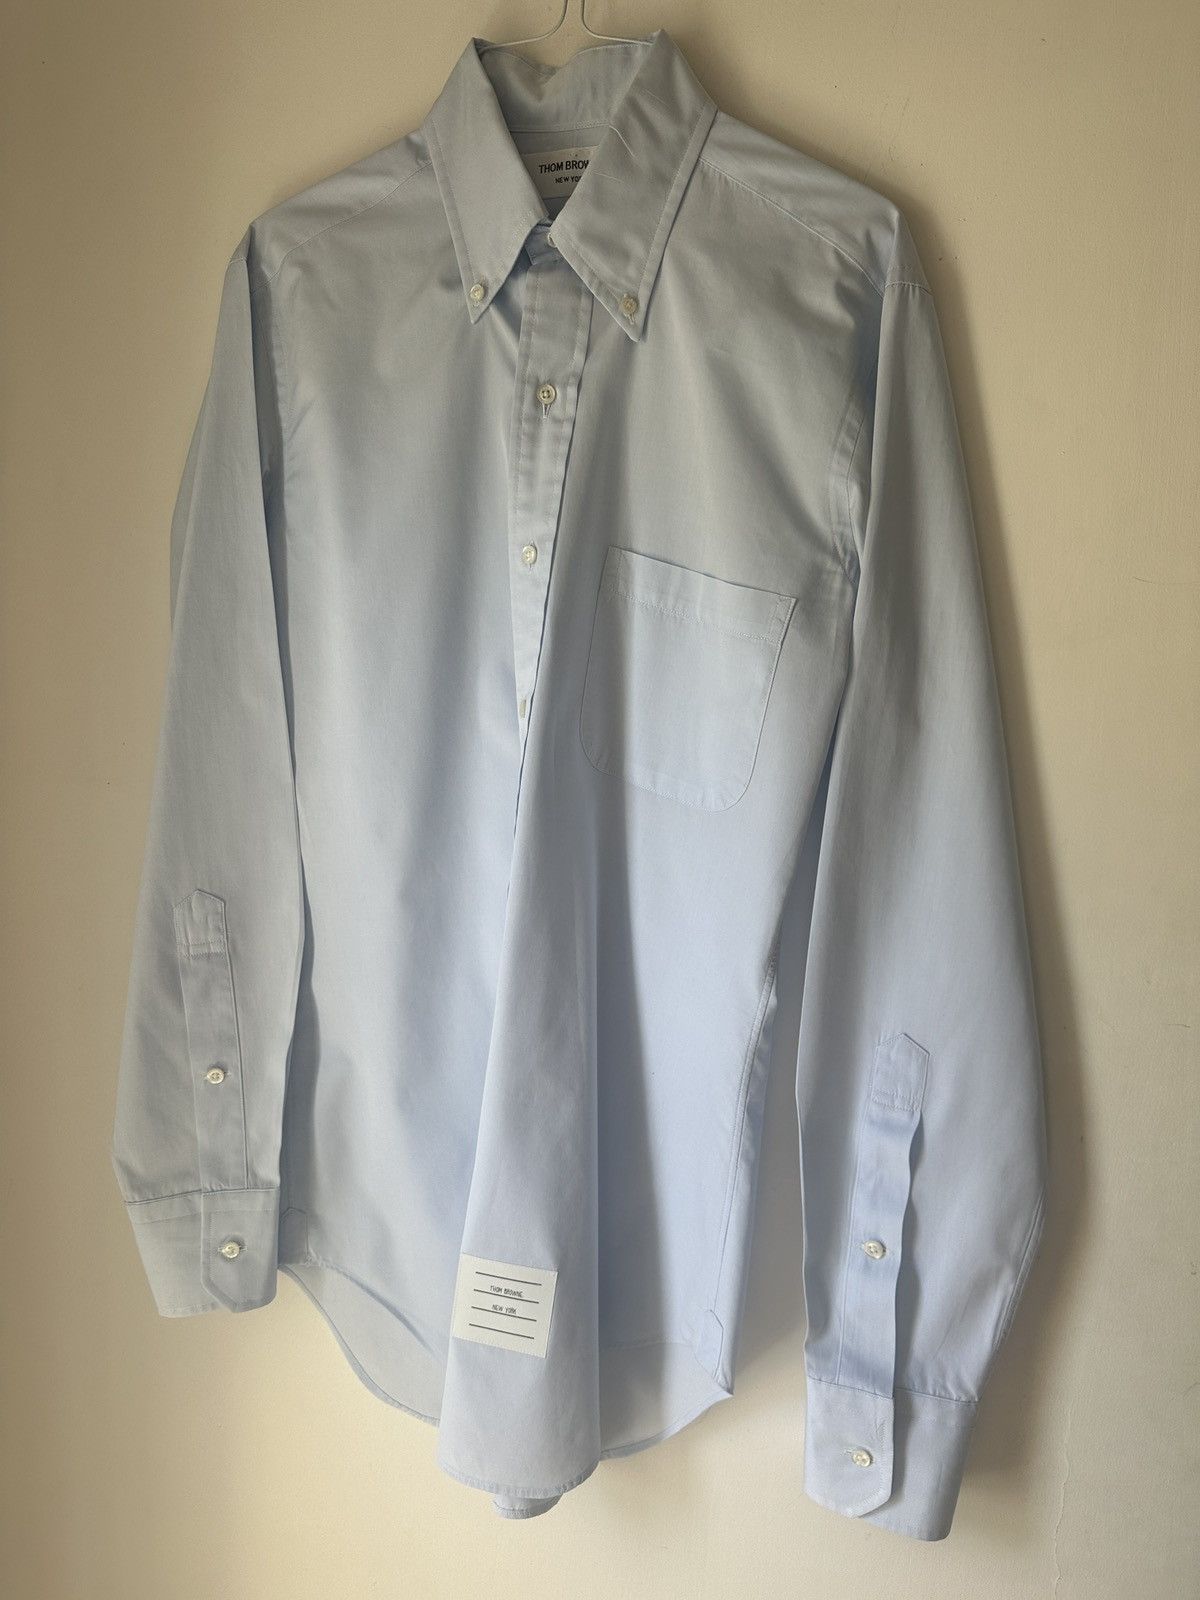 Thom Browne Light Blue Dress Shirt Size 1 - 1